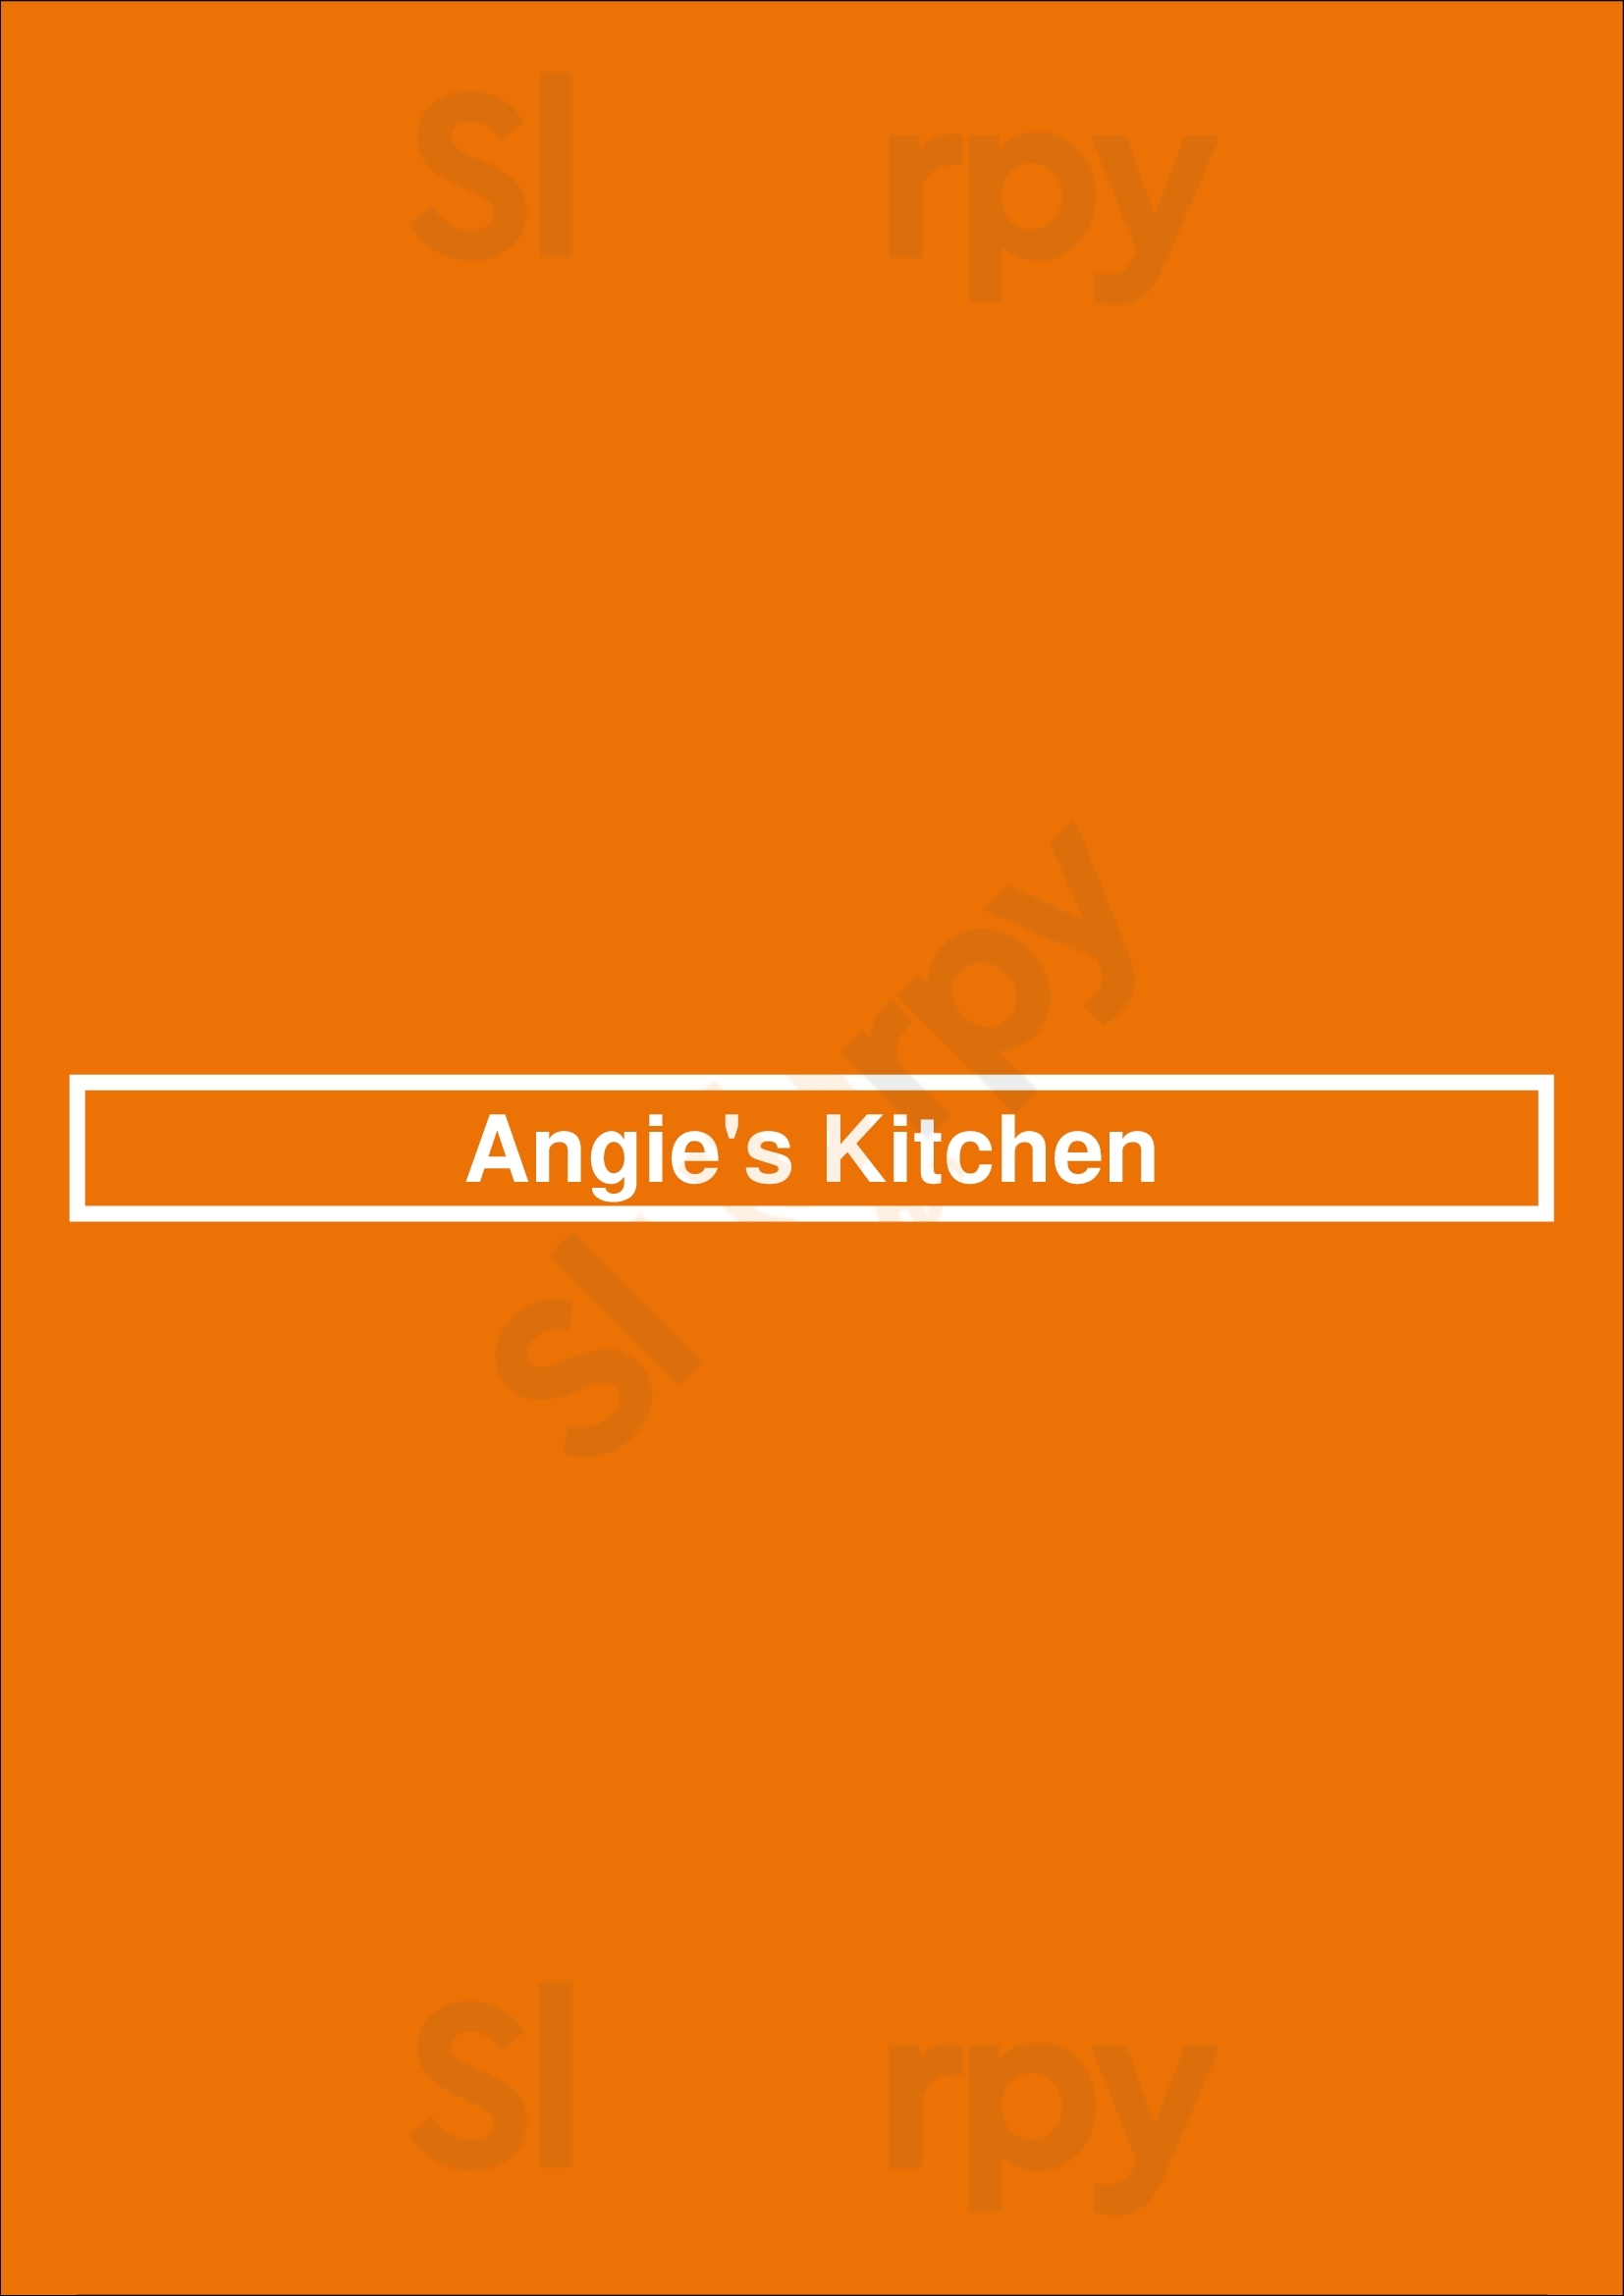 Angie's Kitchen Waterloo Menu - 1